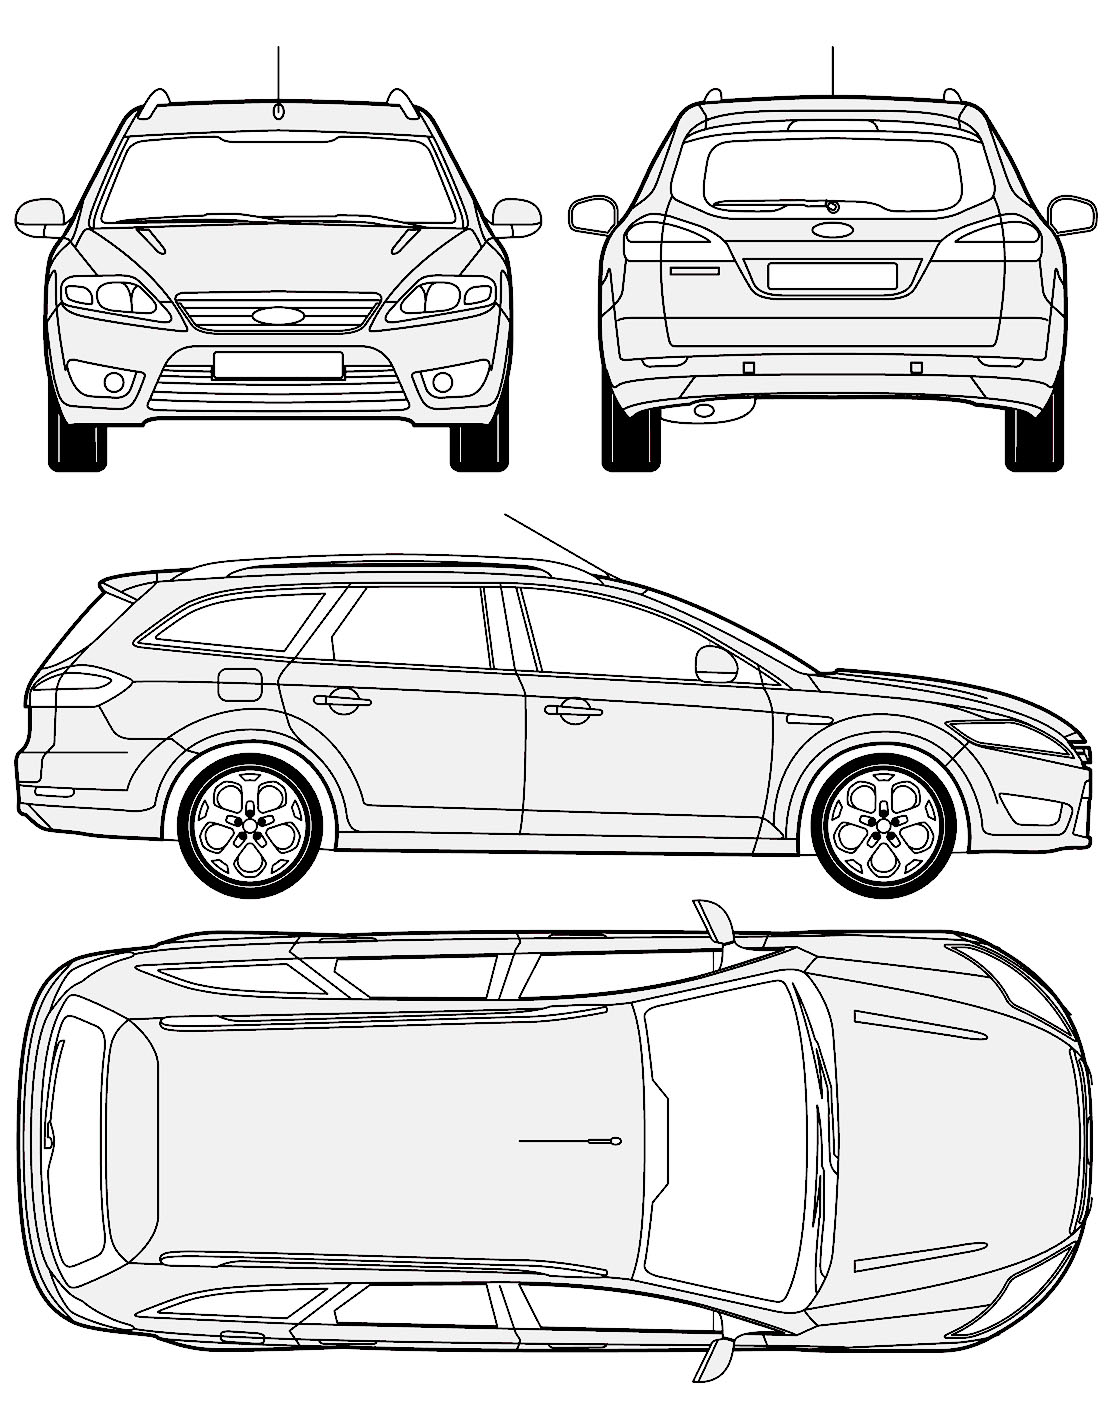 Ford mondeo blueprints #9